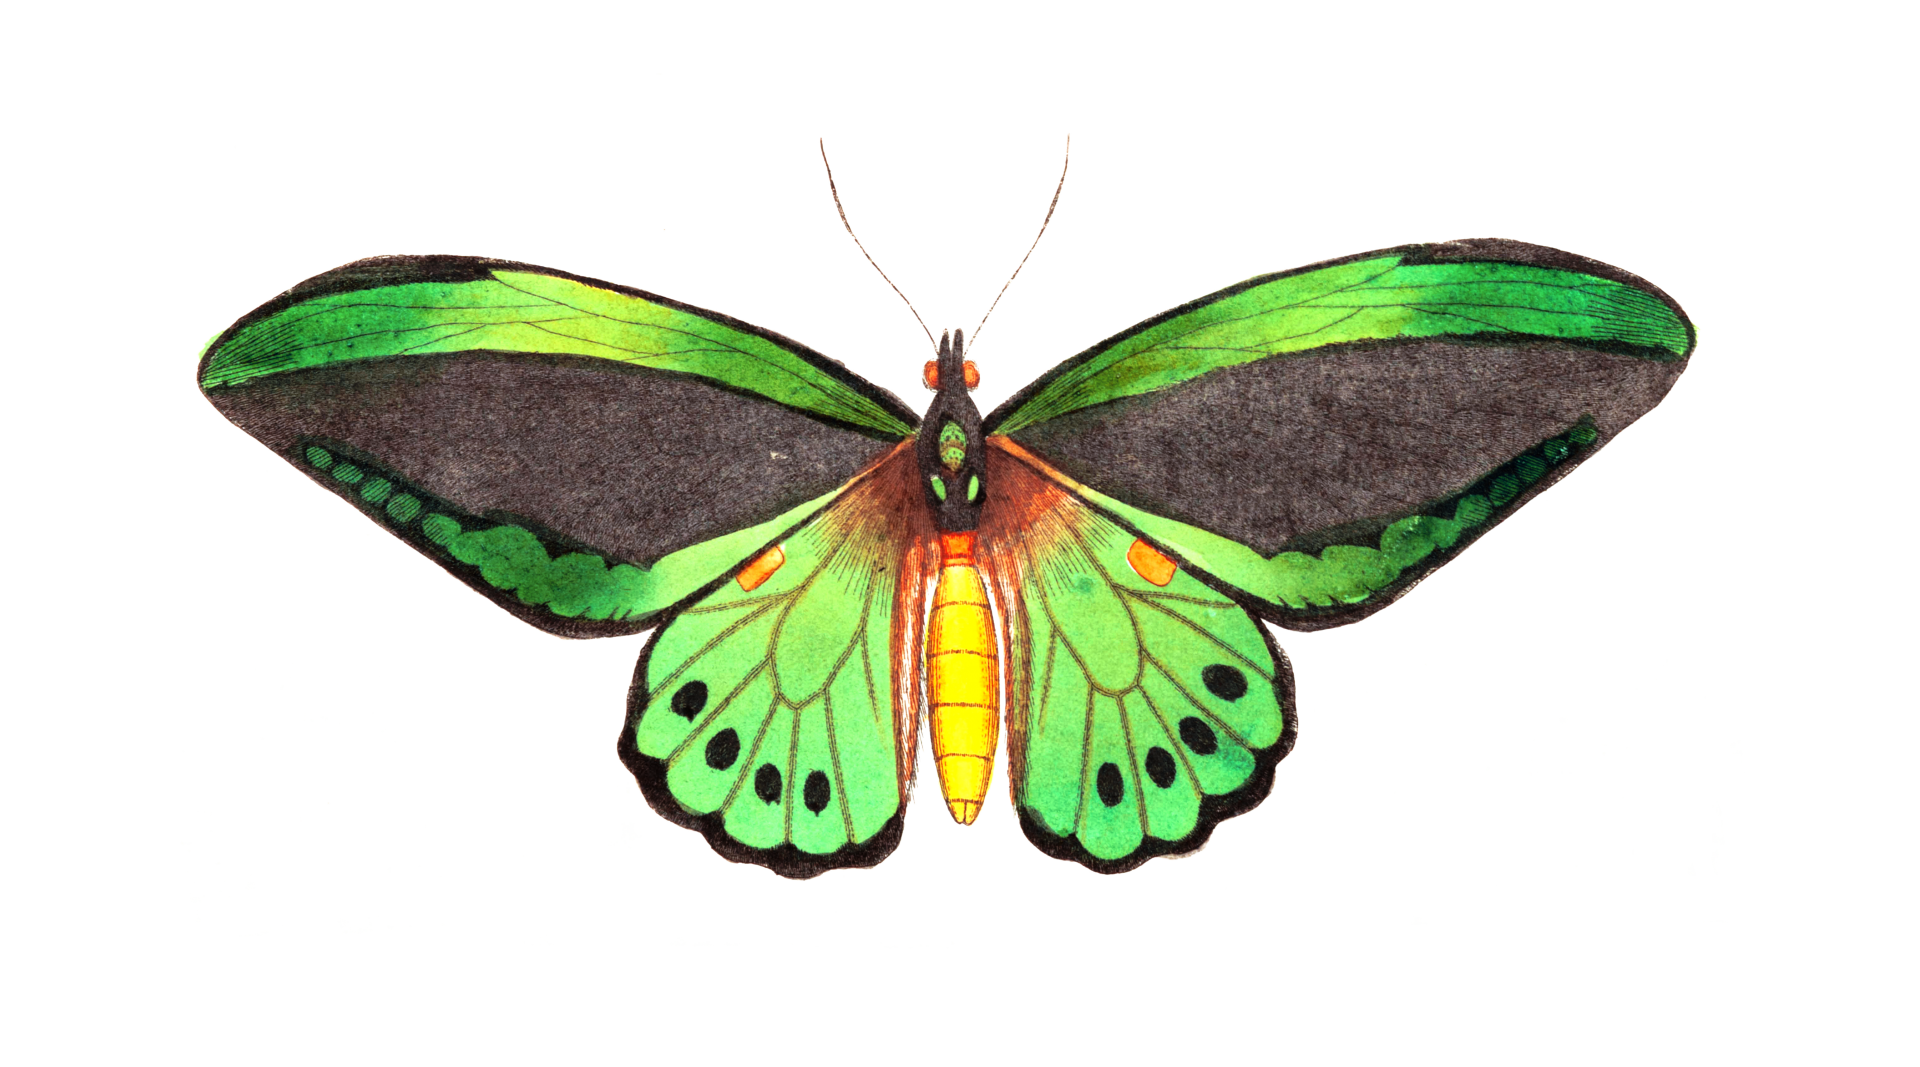 Butterflies Moth Vintage Art